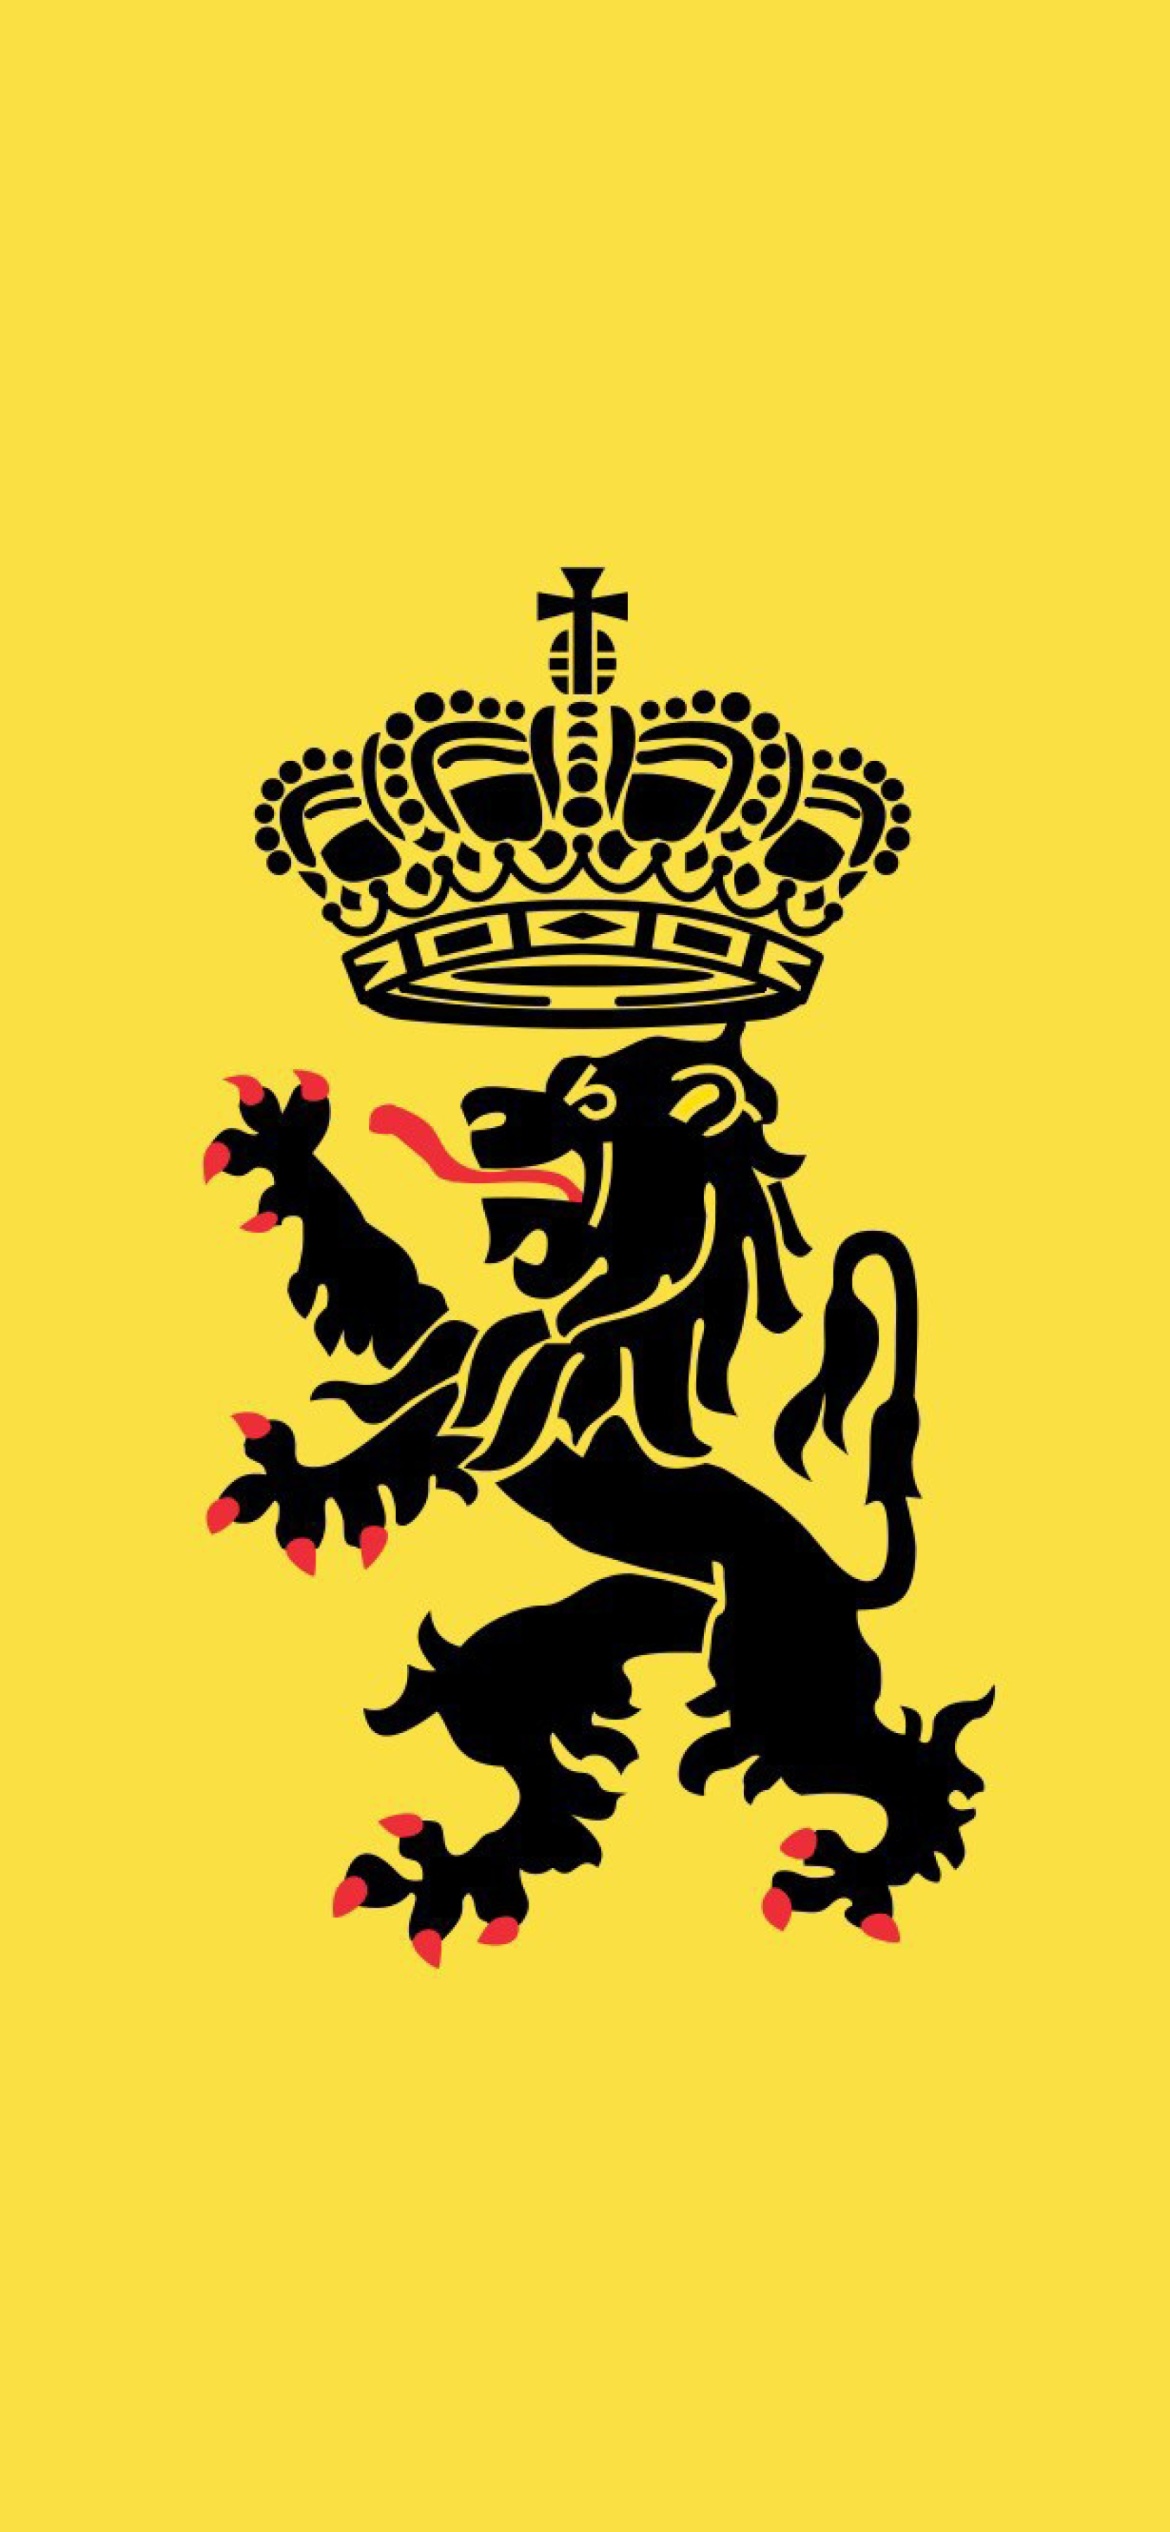 Das Belgium Flag and Gerb Wallpaper 1170x2532